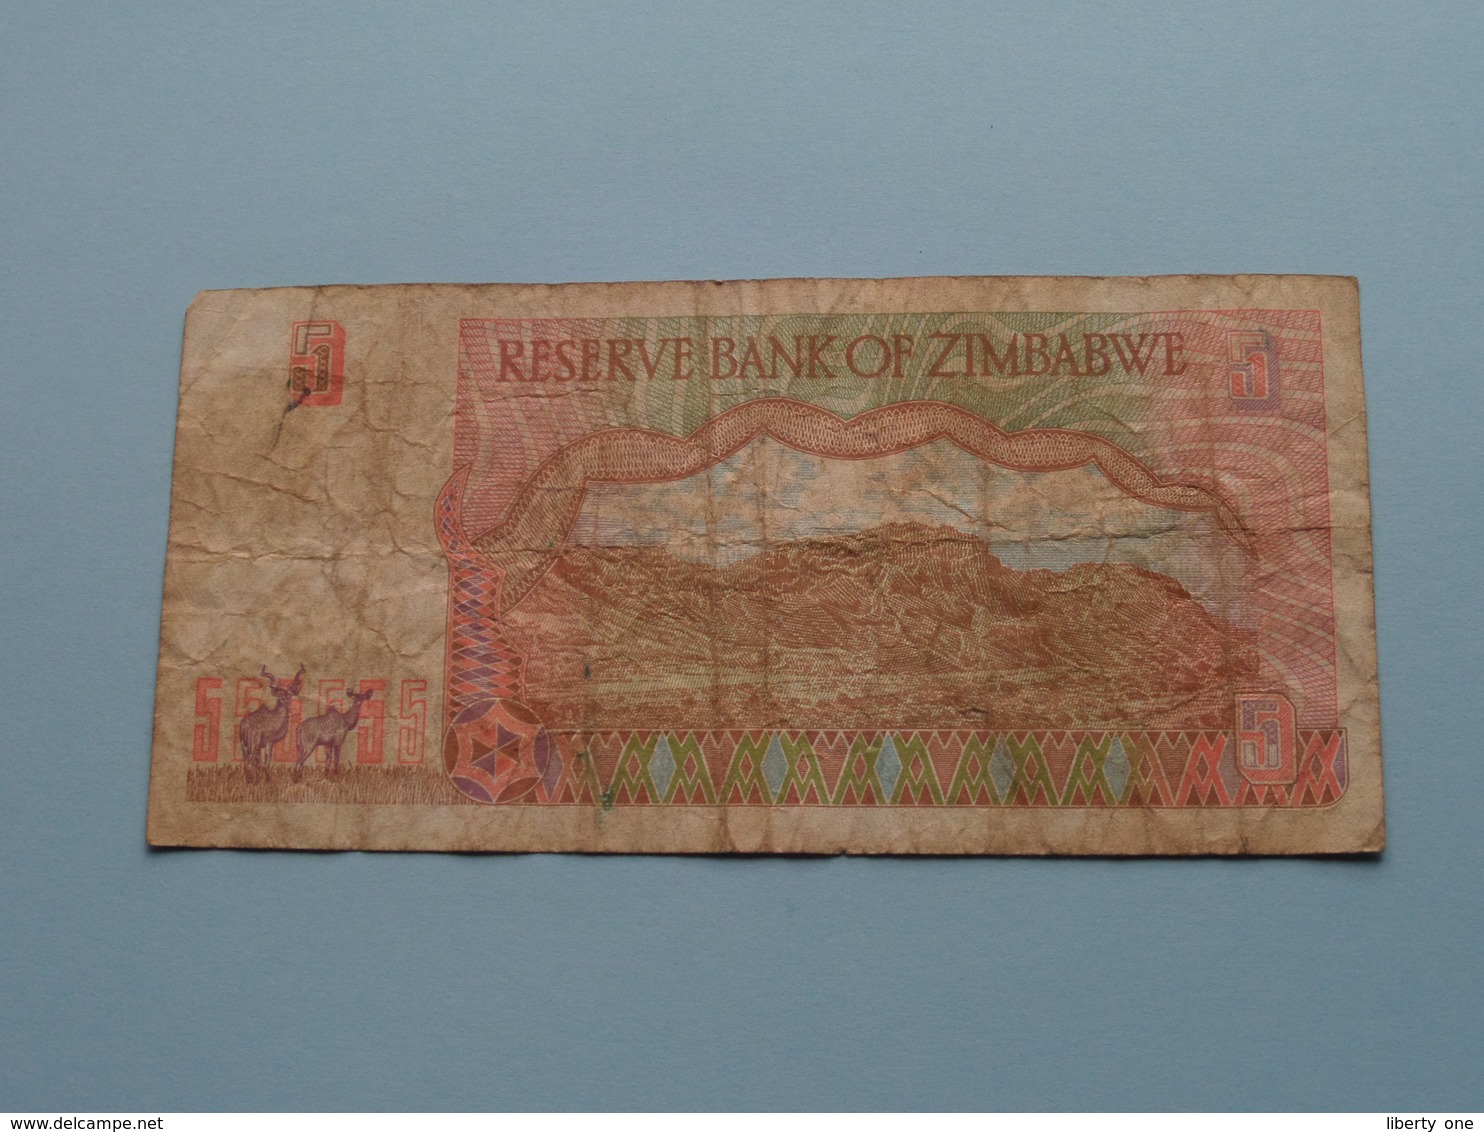 5 - FIVE DOLLARS ( BC7668948 ) Reserve Bank Of Zimbabwe ( For Grade, Please See Photo ) ! - Zimbabwe